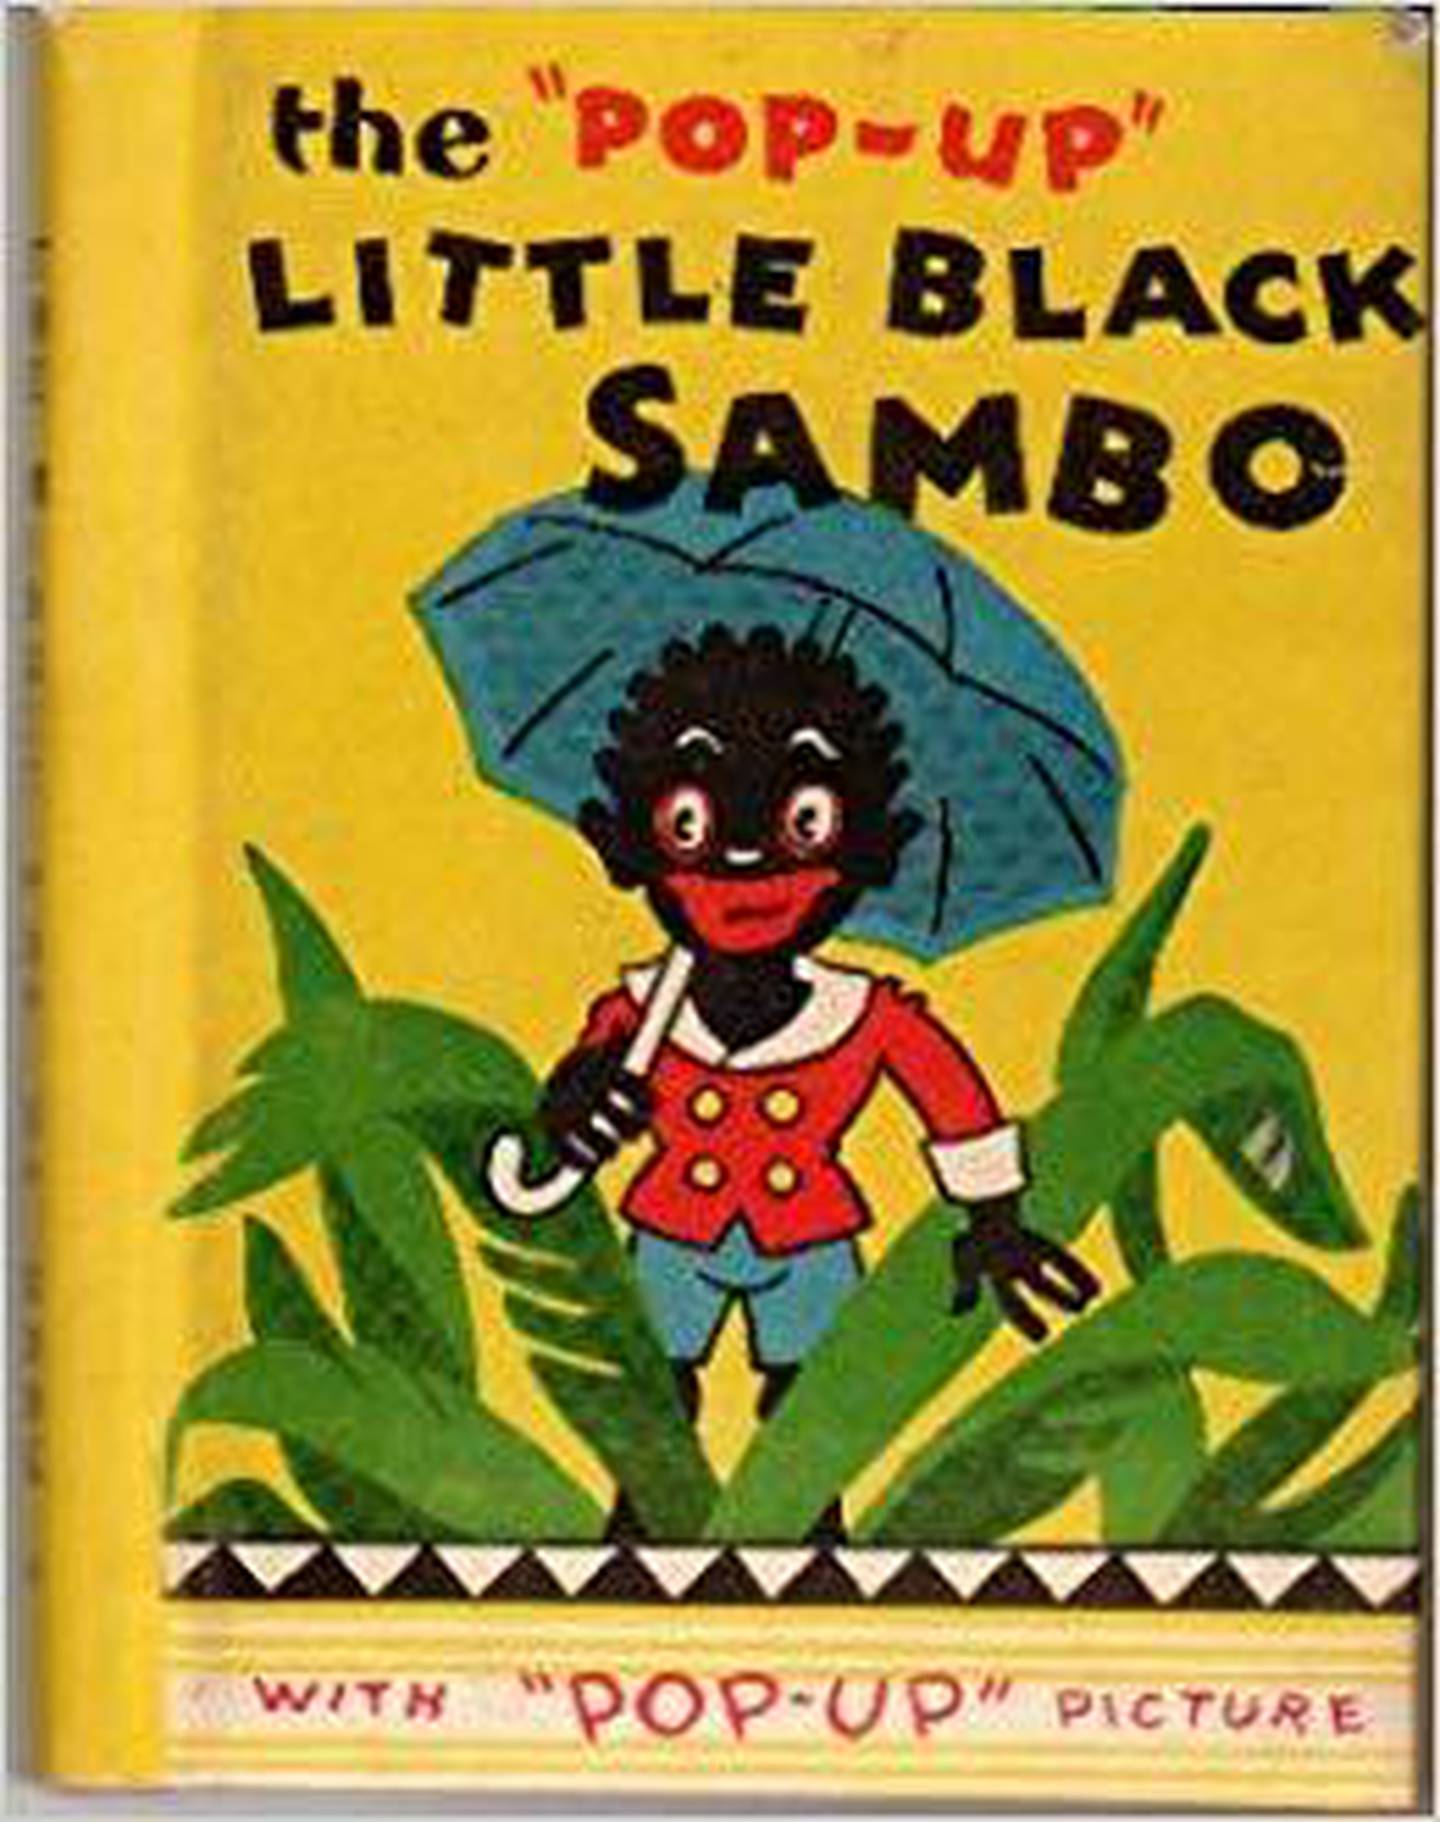 A vintage copy of the book Little Black Sambo. Courtesy Amazon